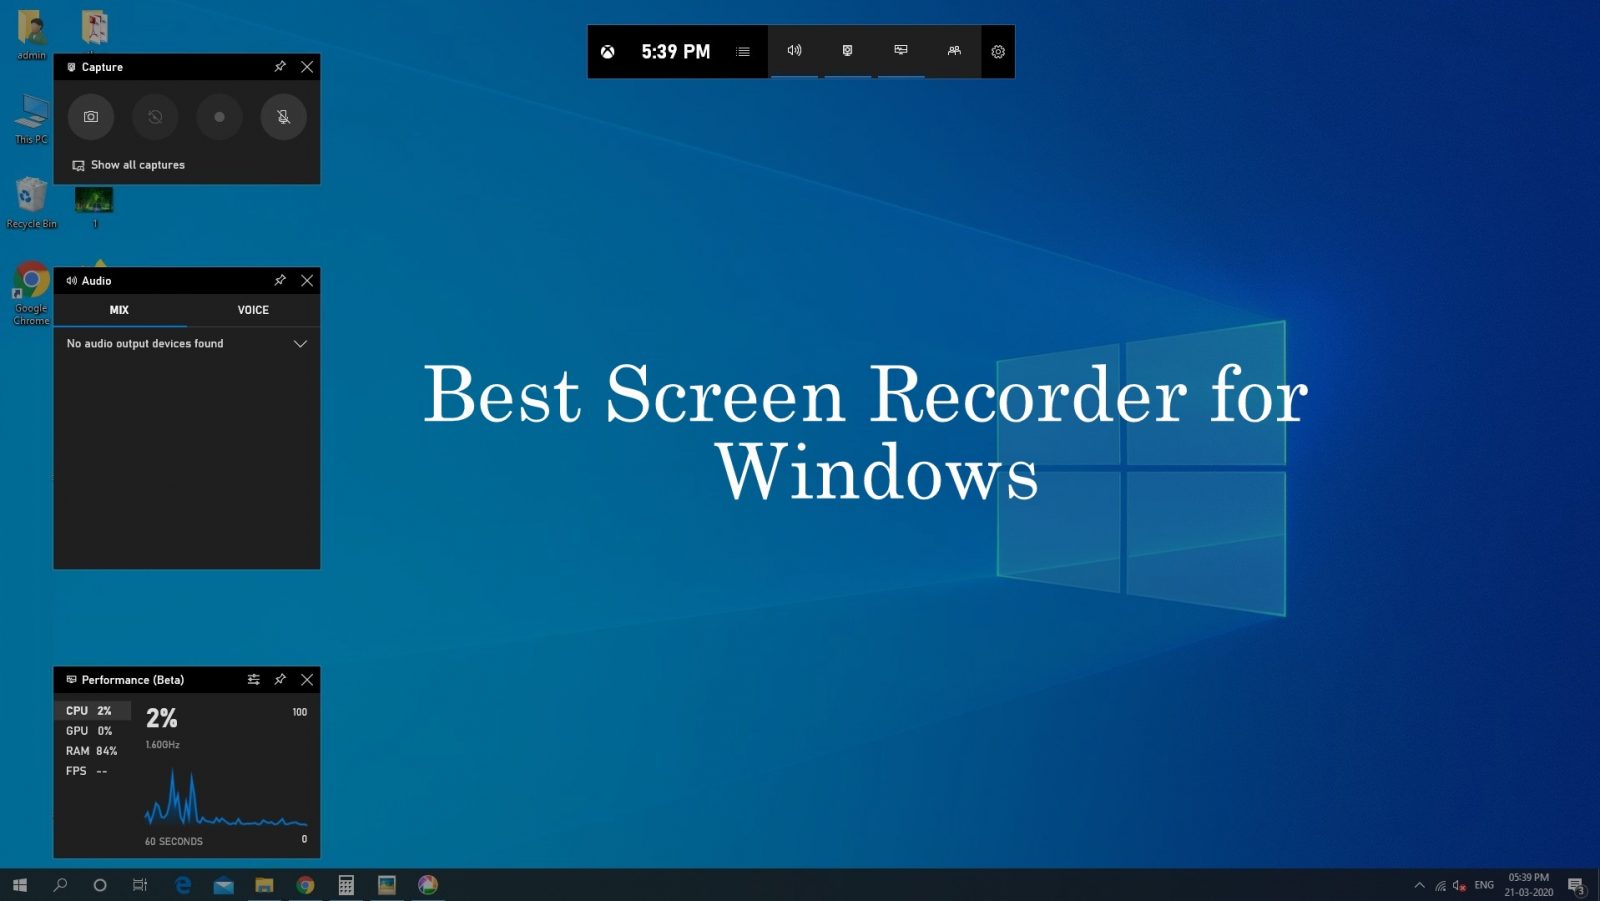 screen recorder windows 10 app